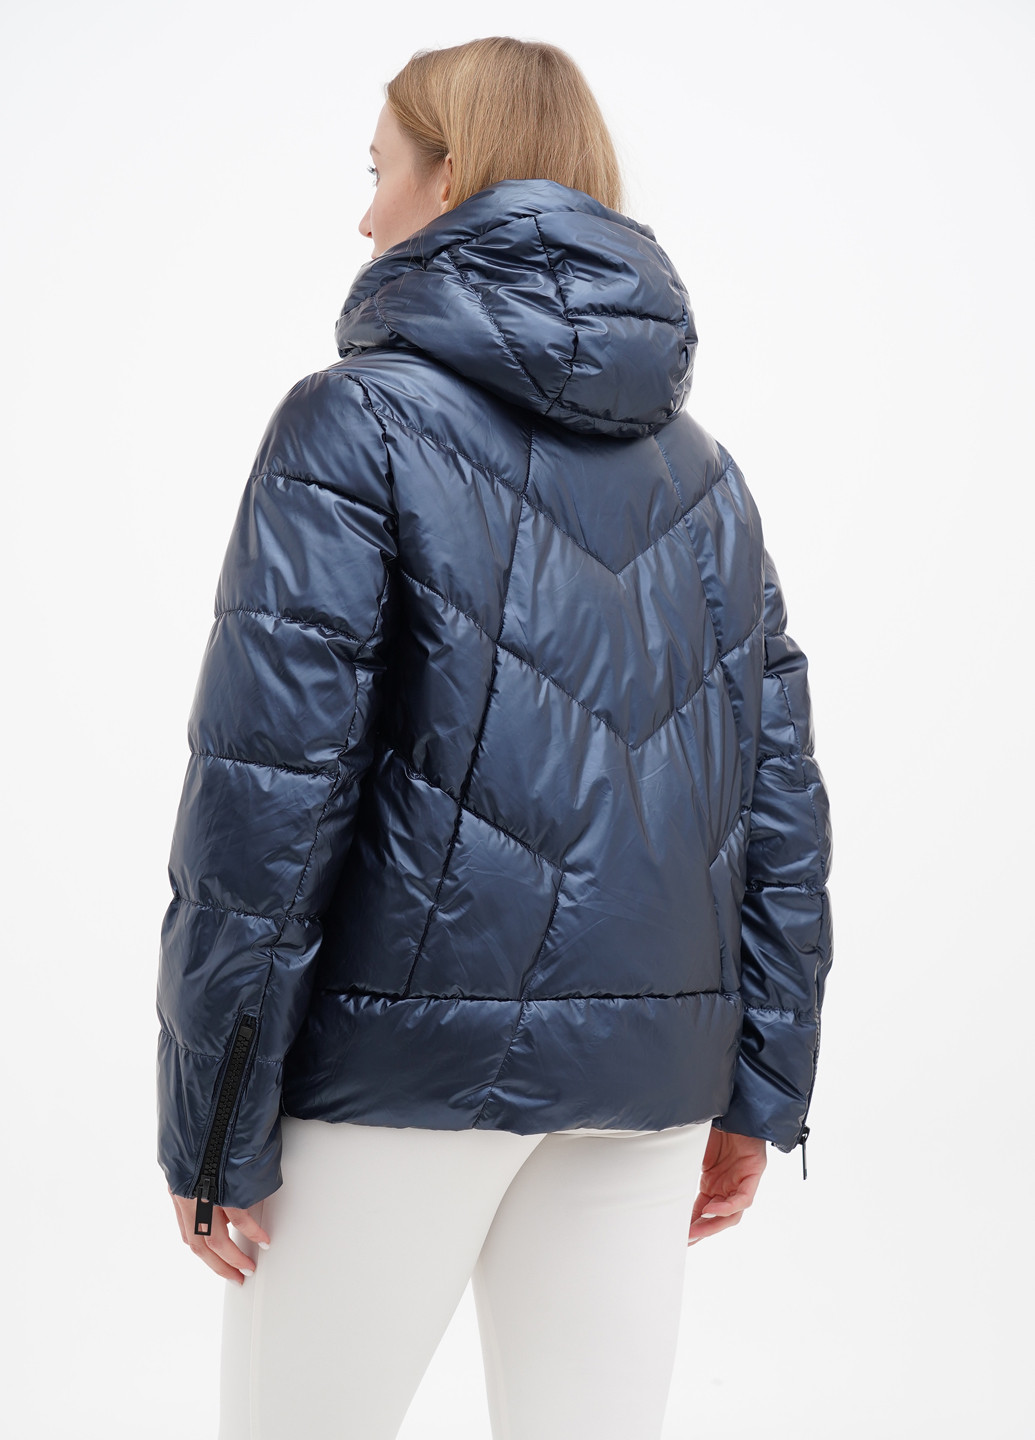 Синяя зимняя куртка Fly luxury